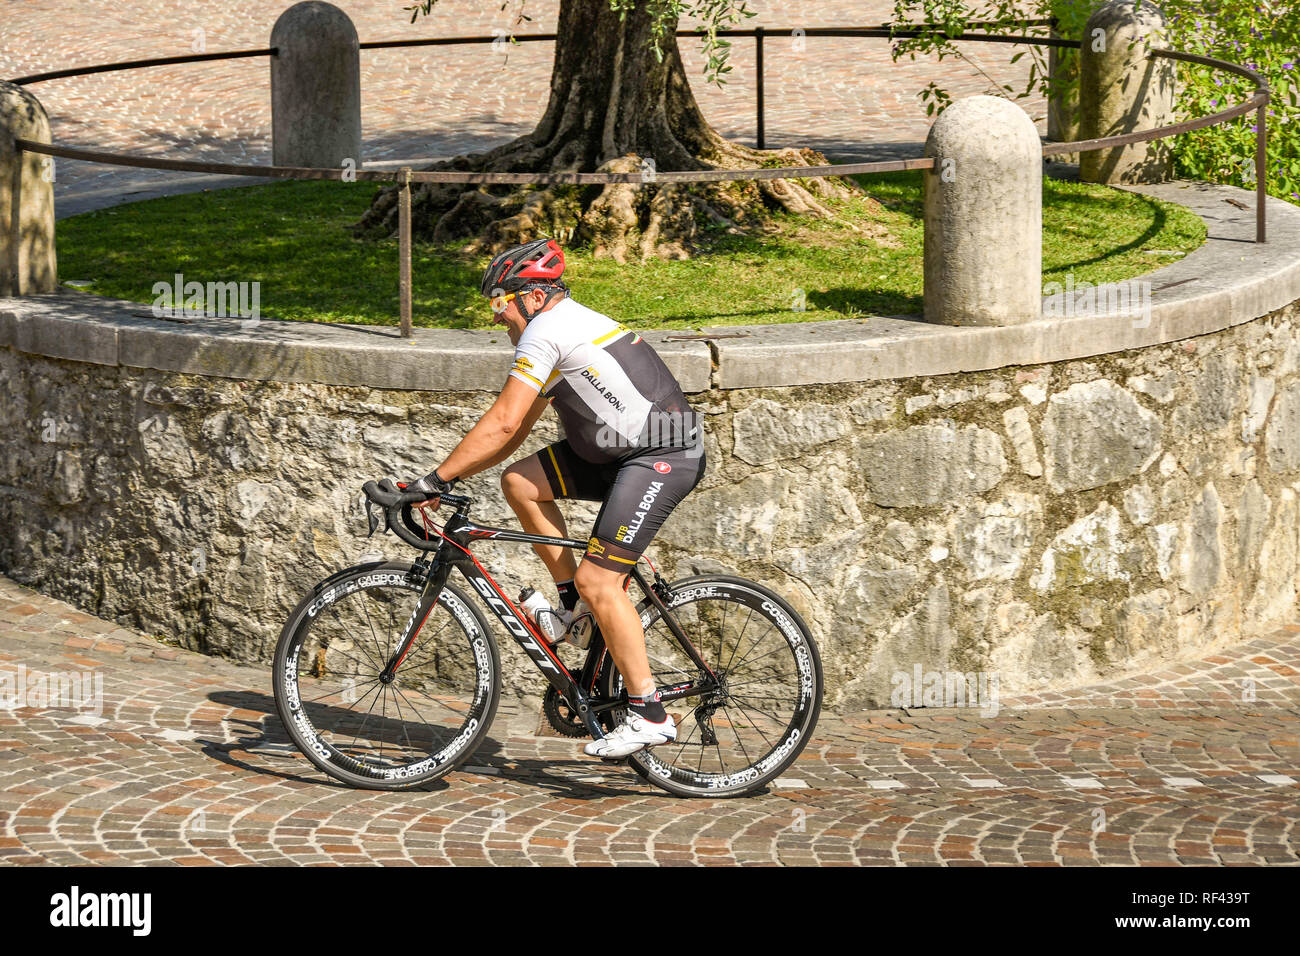 GARDONE RIVIERA, ITALY - SEPTEMBER 2018: Cyclist pedalling up the steep hill outside the Vittoriale degli Italiani gardens in Gardone Riviera. Stock Photo